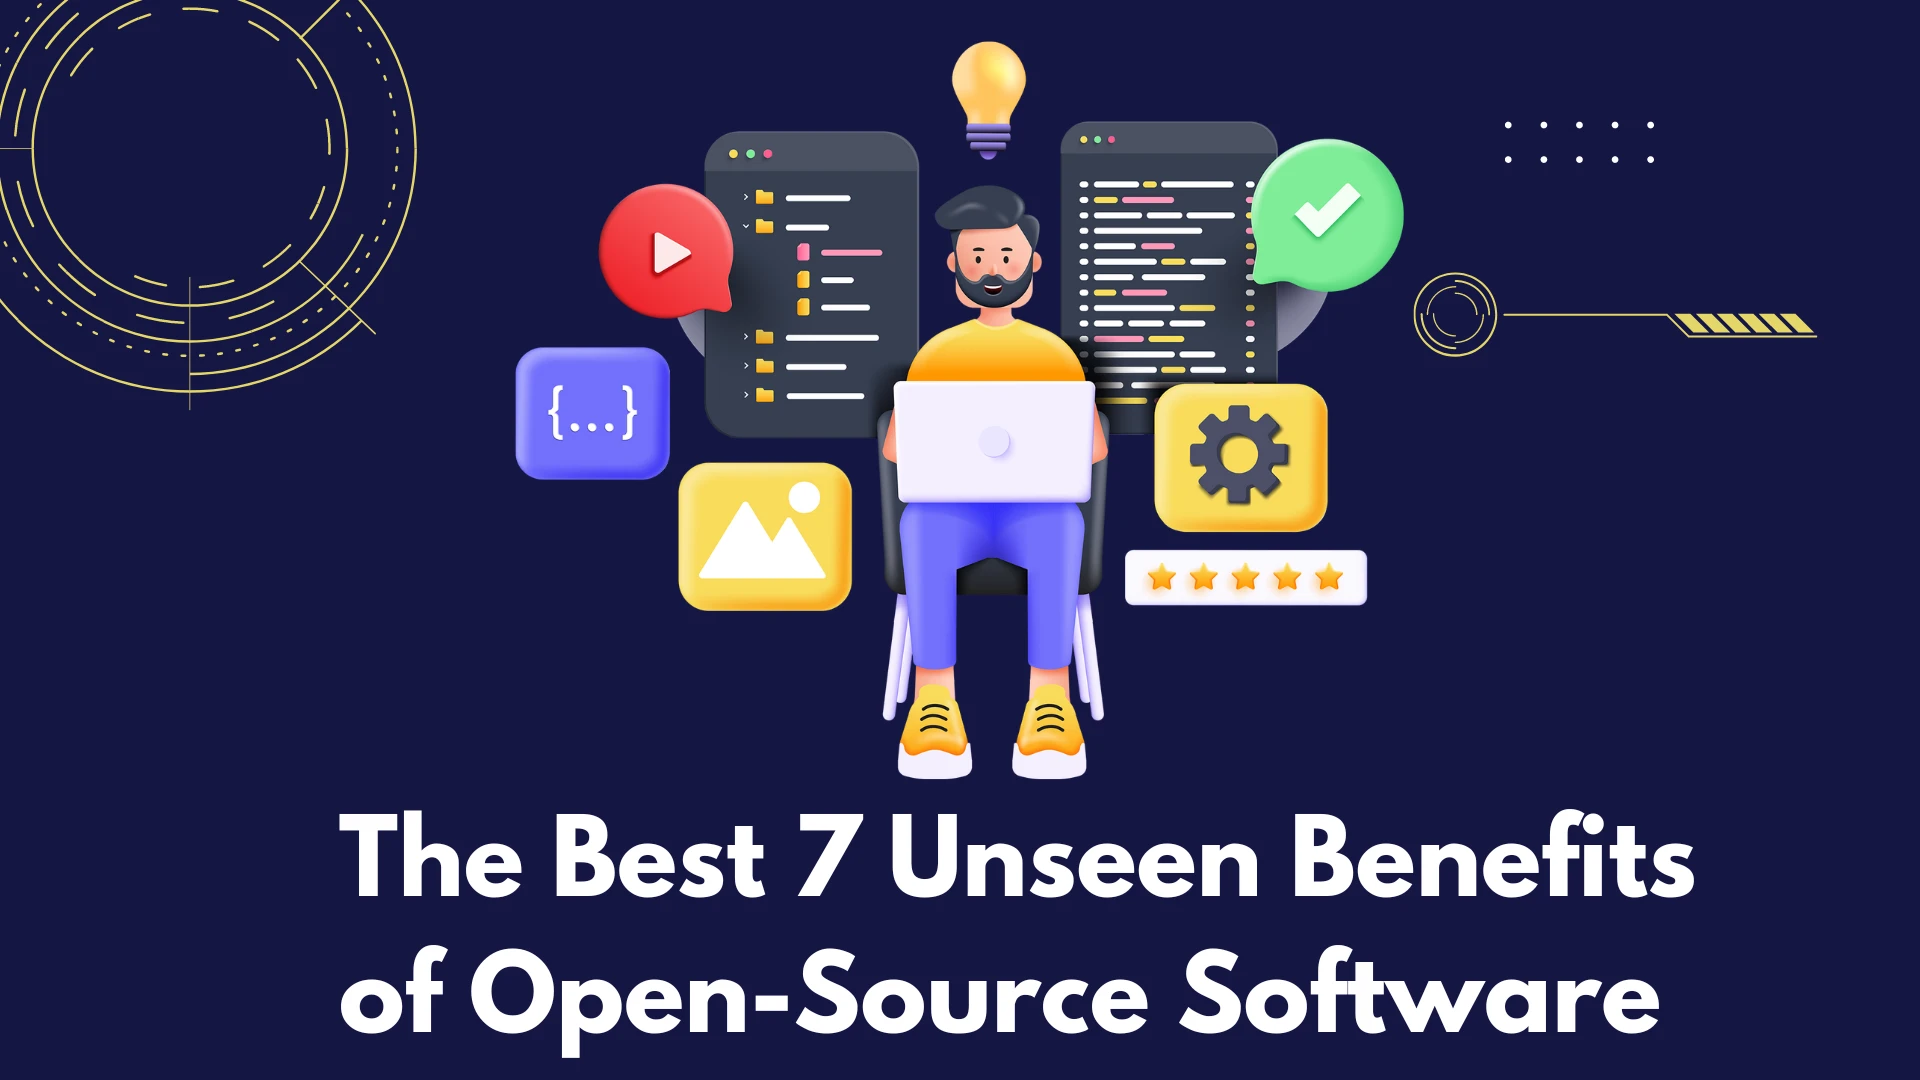 Benefits of Open-Source Software